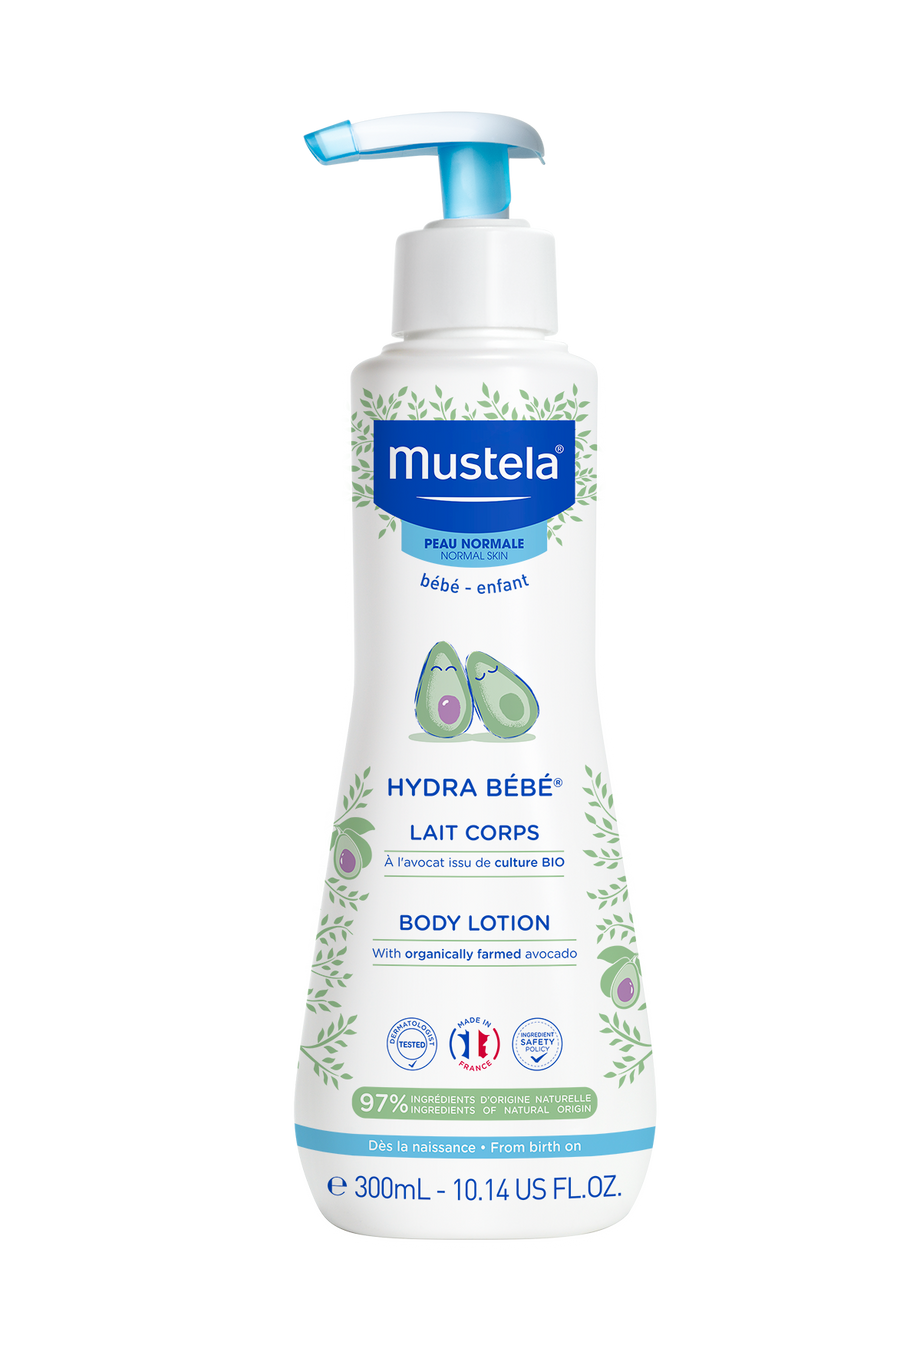 Mustela Hydra Bebe body lotion with Organic avocado (300ml)